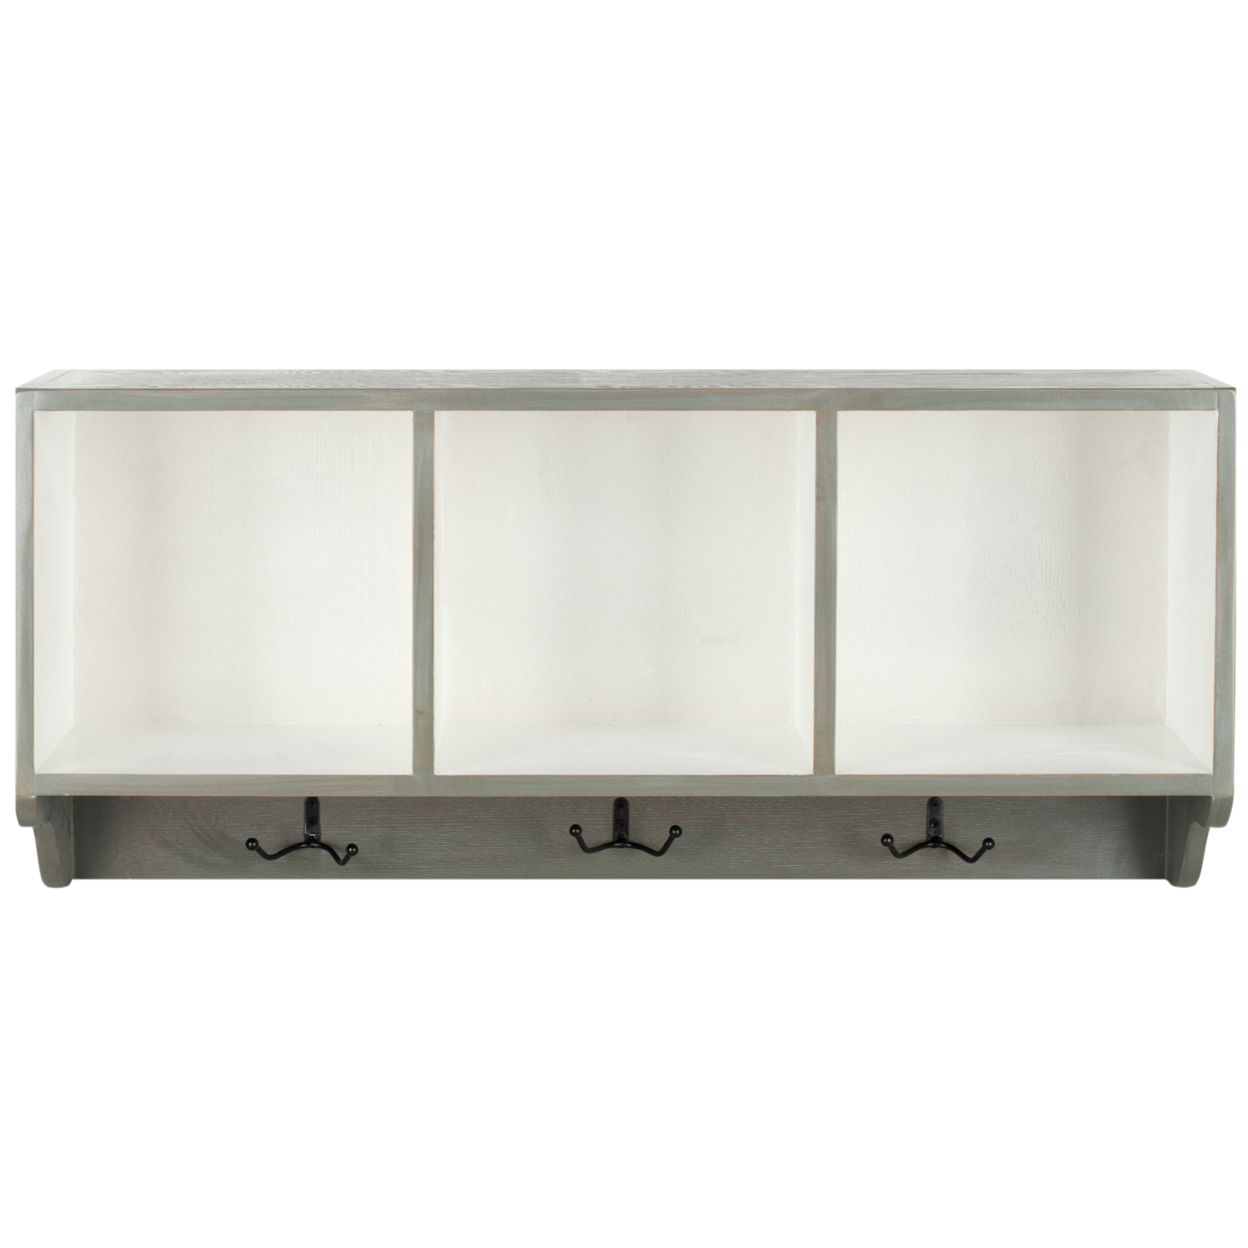 SAFAVIEH Alice Wall Shelf With Storage Compartments Ash Grey / White